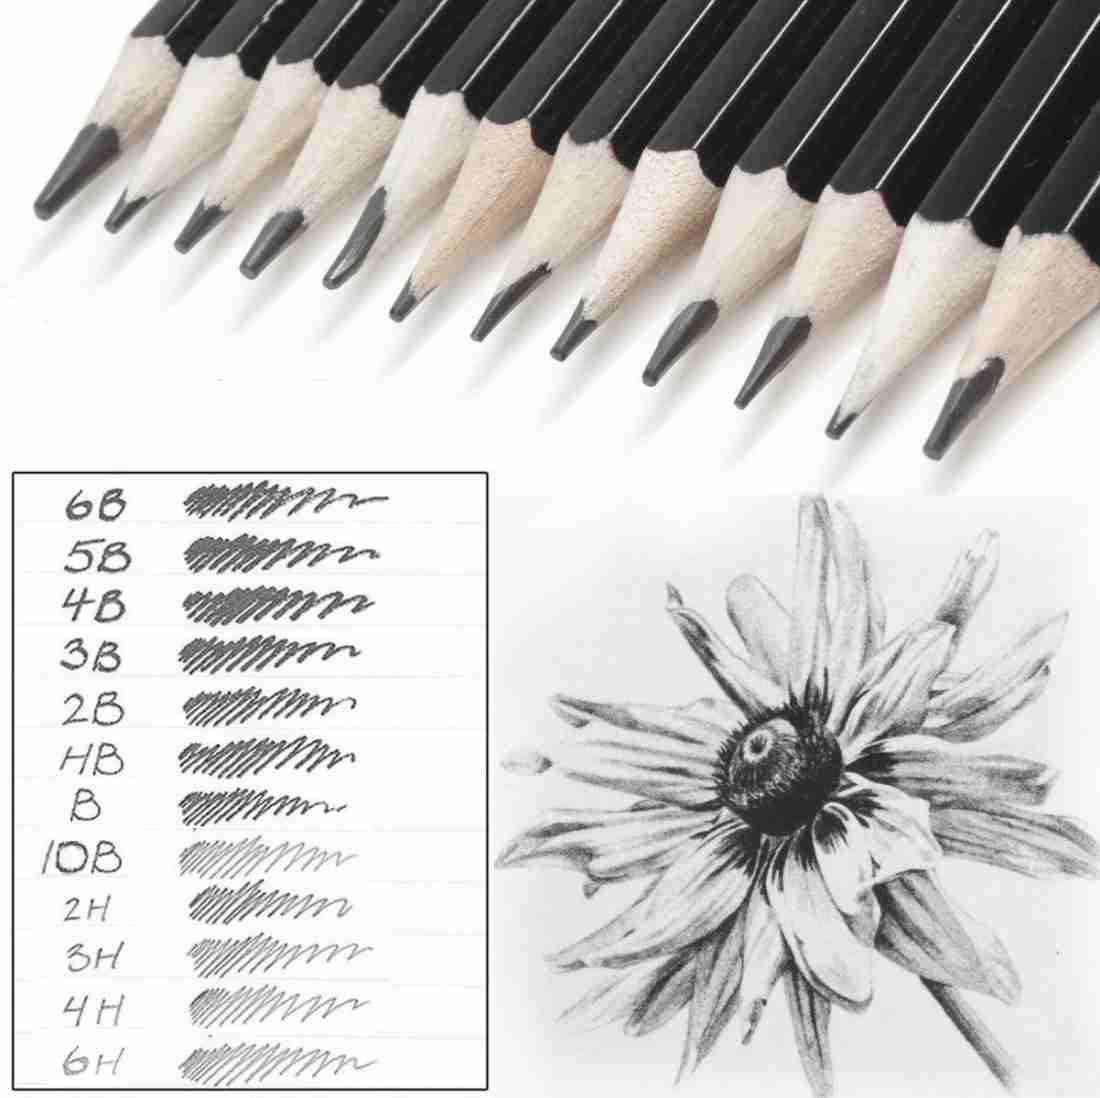 Definite Art Graphite Professional Drawing Sketching Pencil  Set- Artist Grade Degree Pencils 10B, 8B, 6B, 5B, 4B, 3B, 2B, B, HB, 2H, 4H  and 6H (Pack of 12), Art Blending